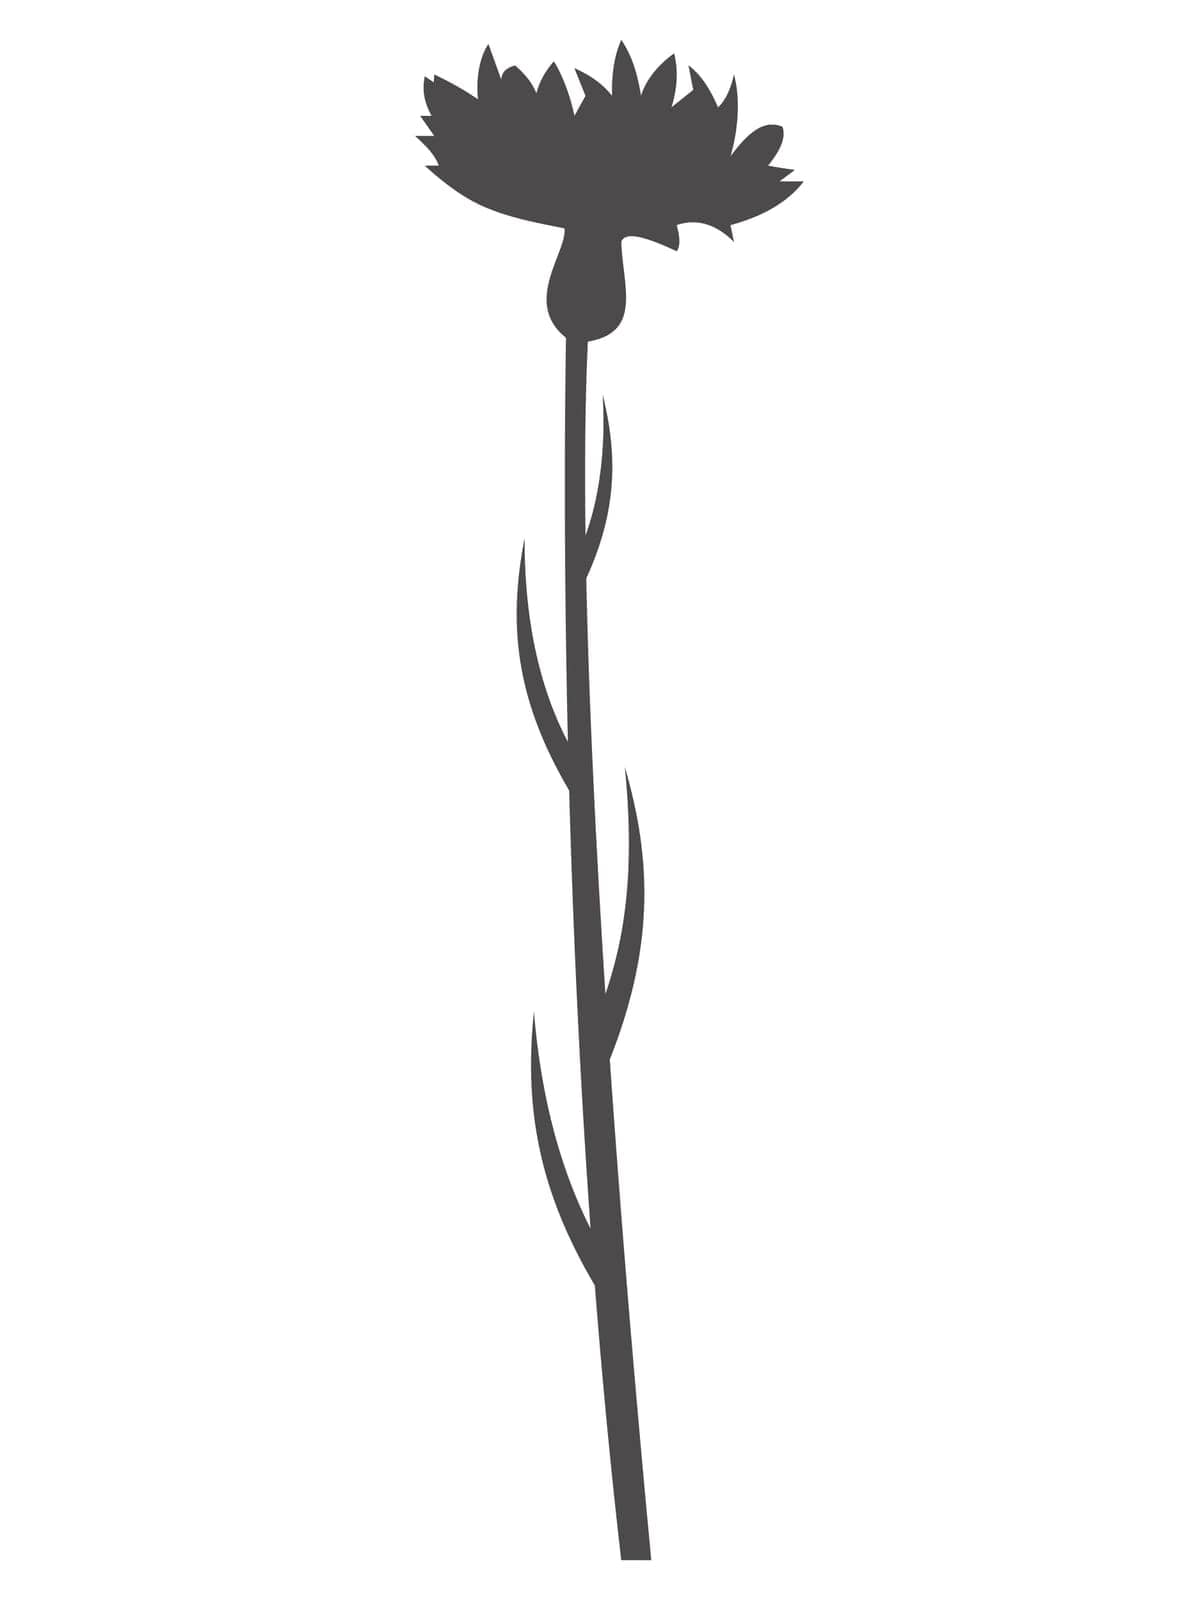 Wildflower in dark grey by manudoodle